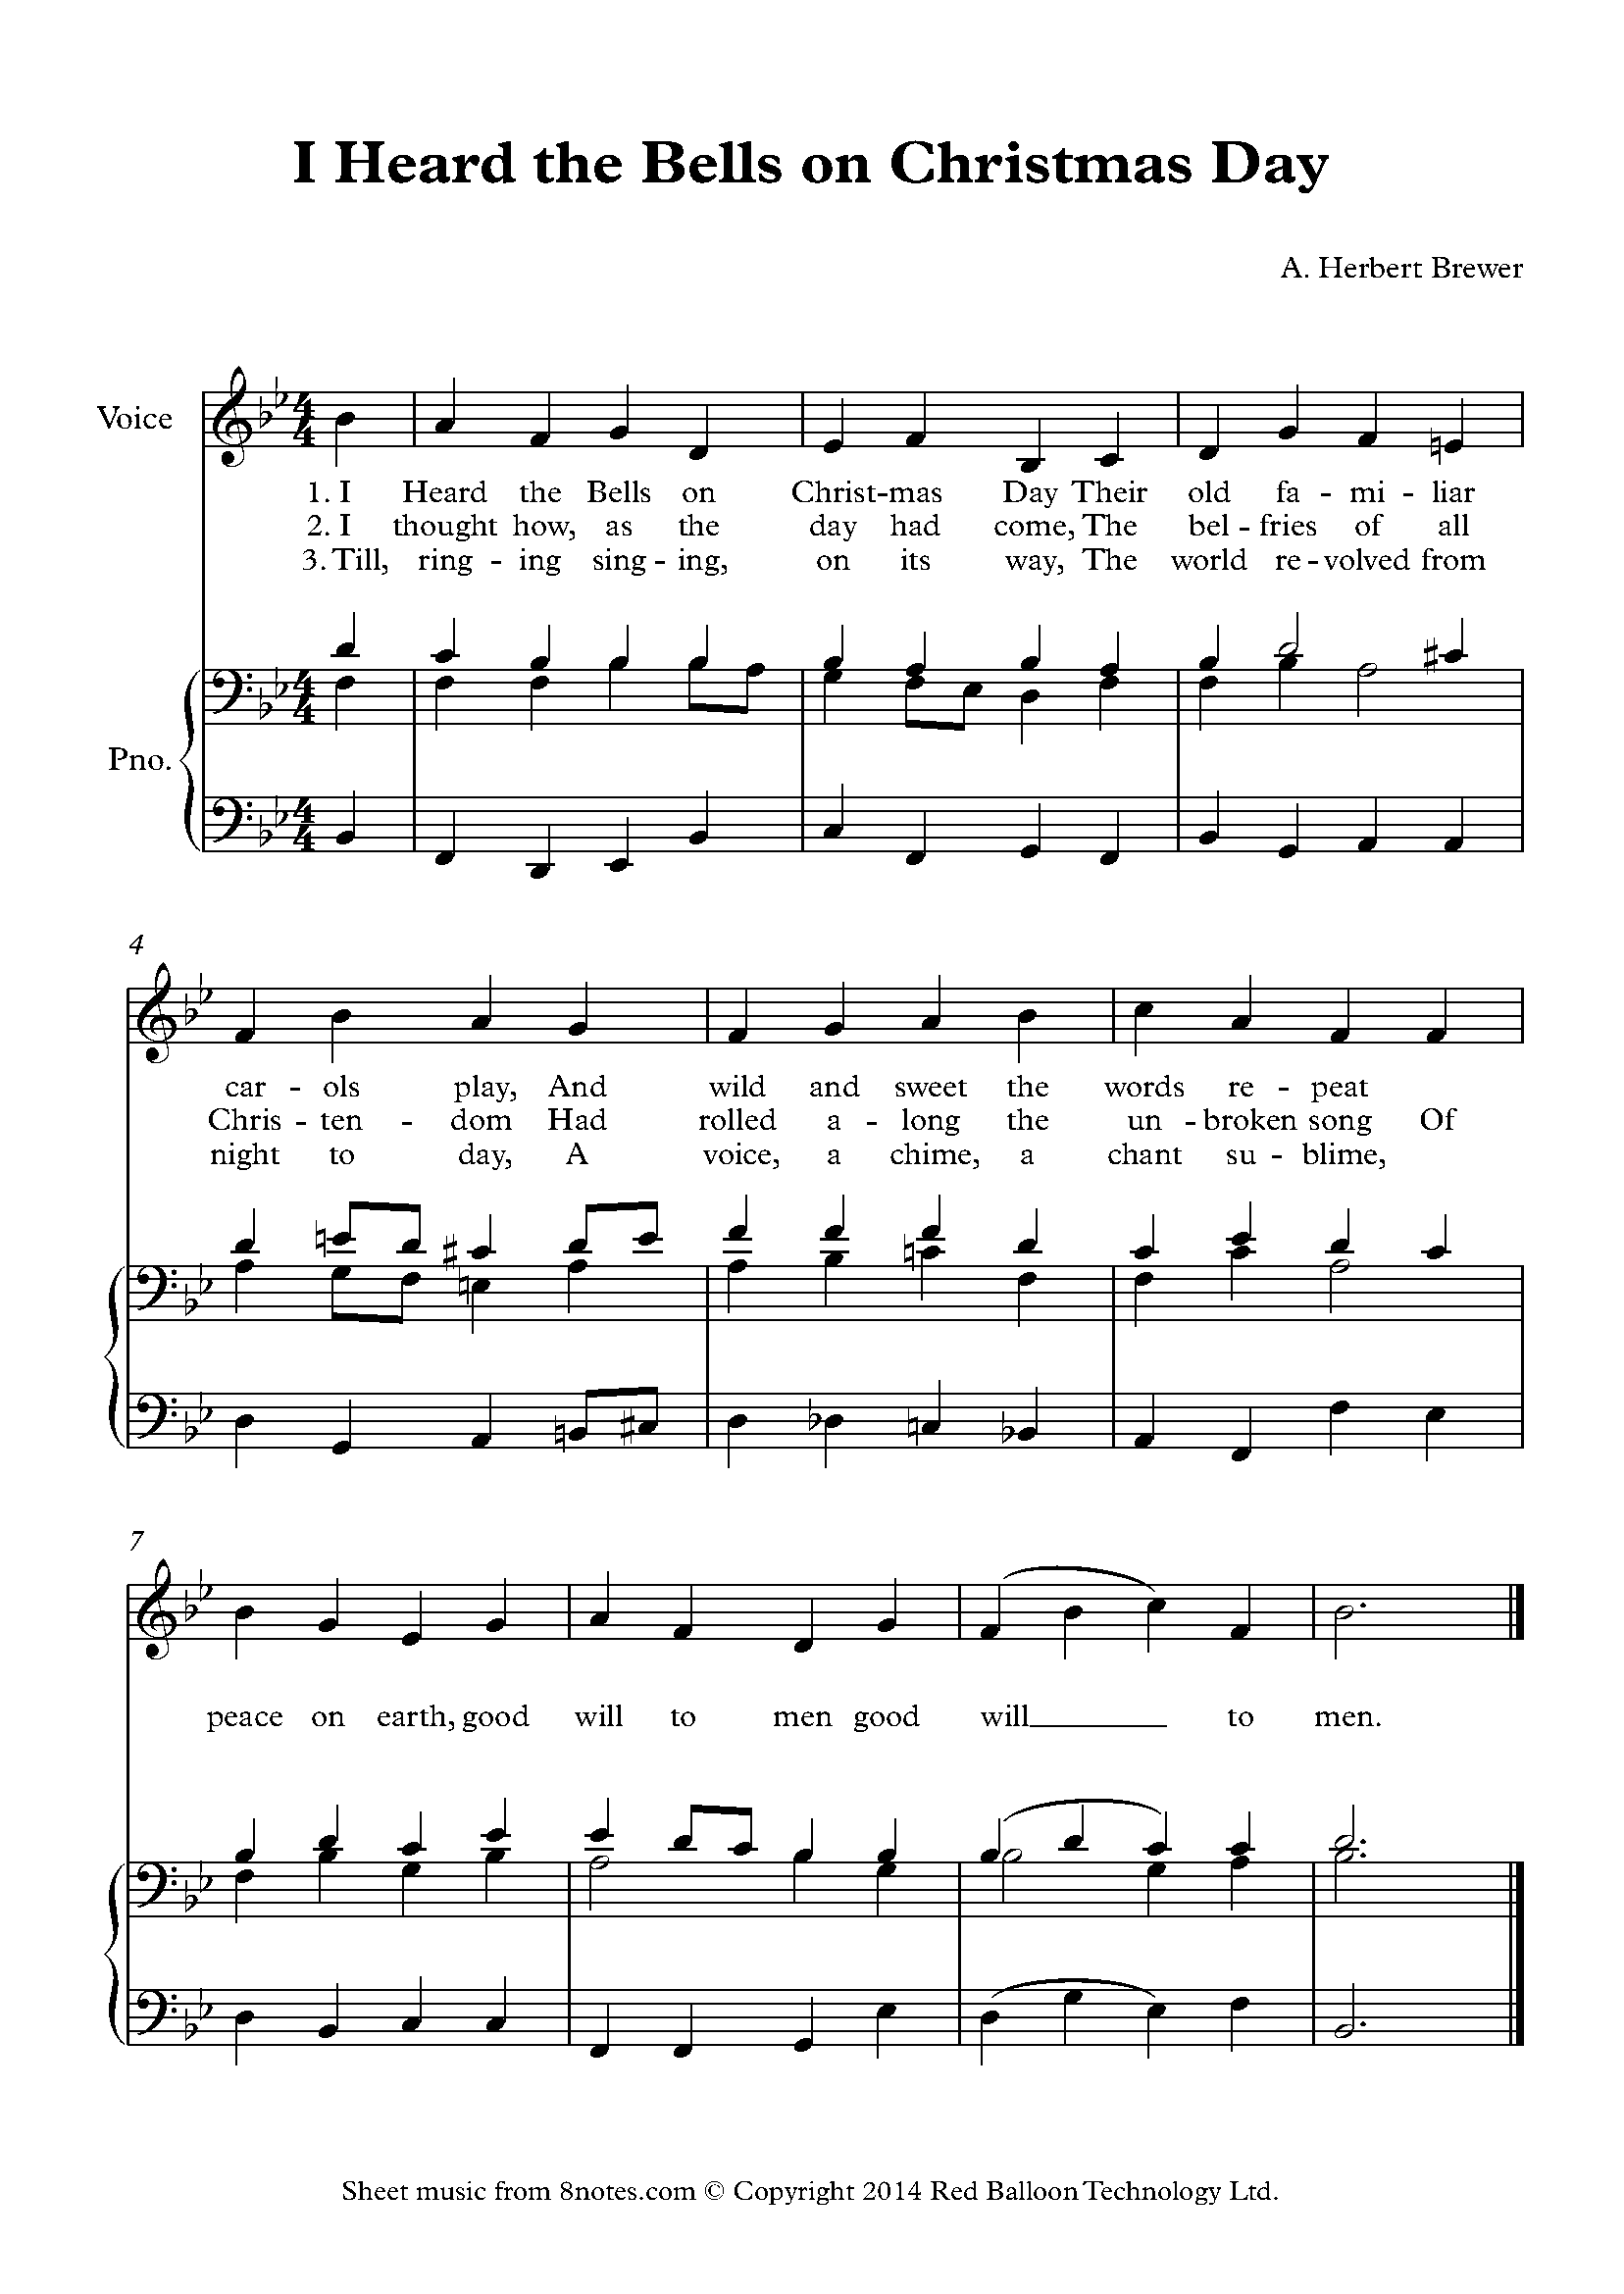 i-heard-the-bells-on-christmas-day-sheet-music-for-unison-choir